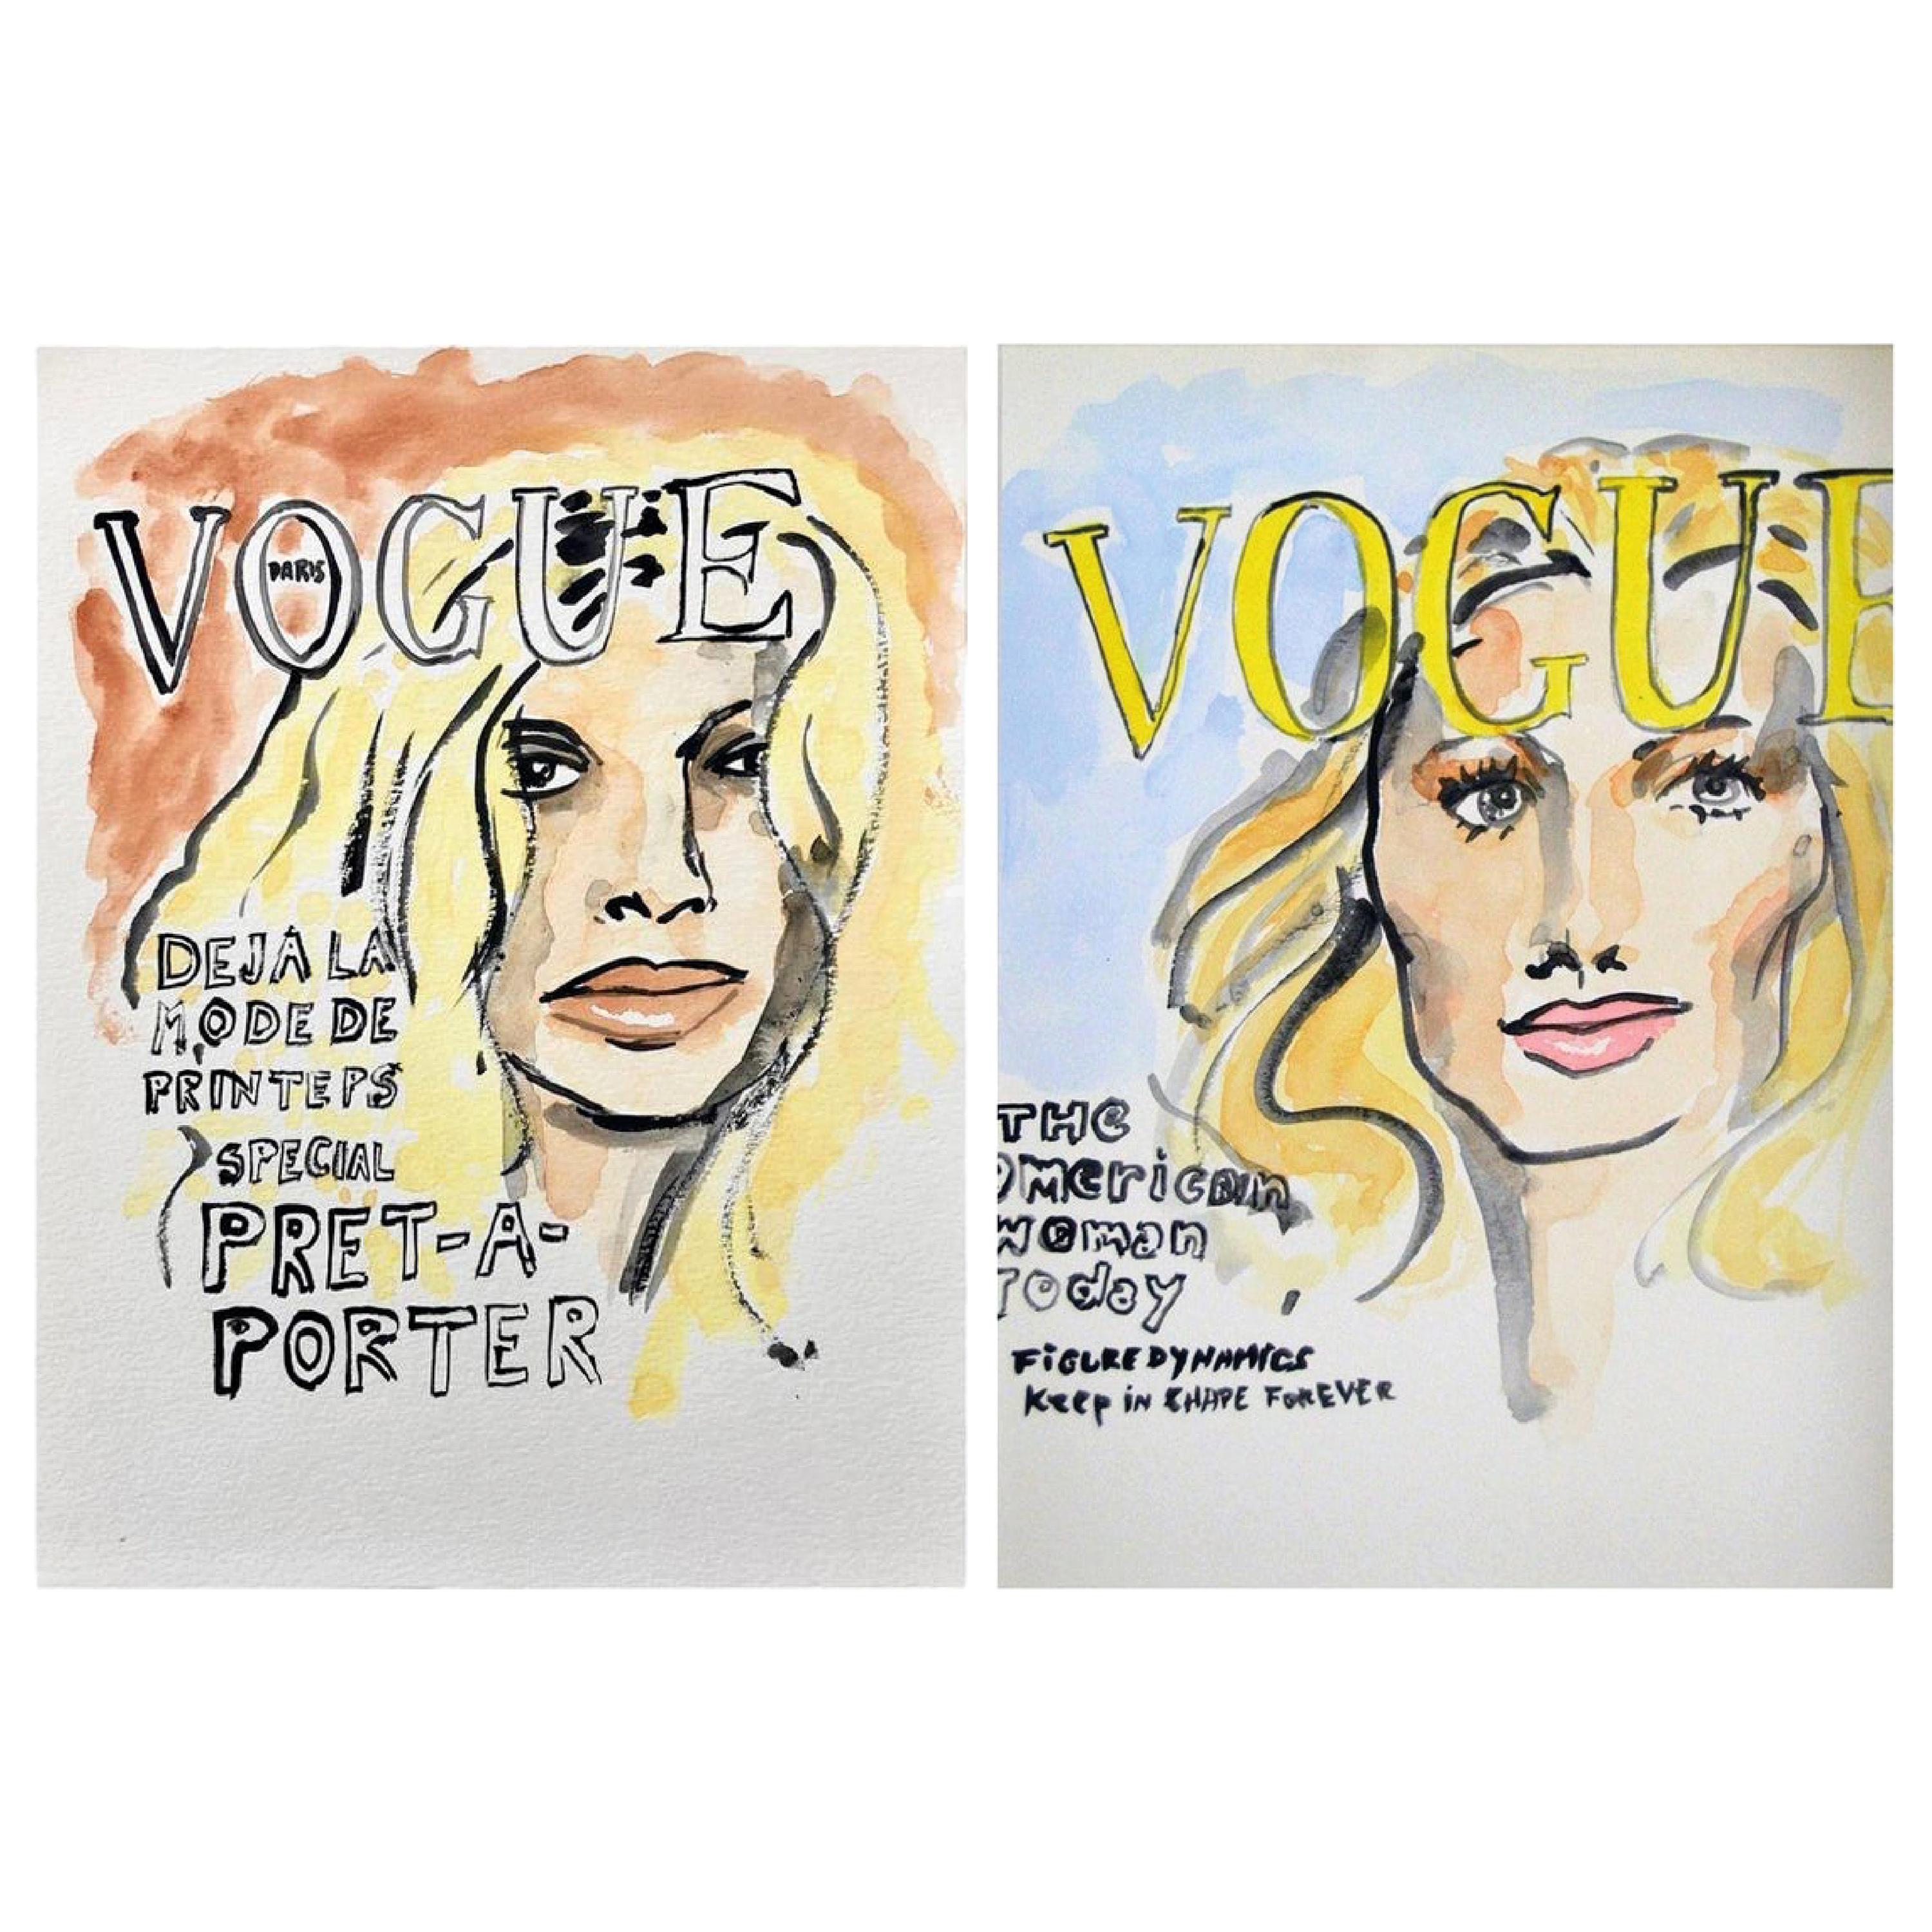 Vogue #1 and Vogue Paris, Set of Two Watercolors on Archival Paper